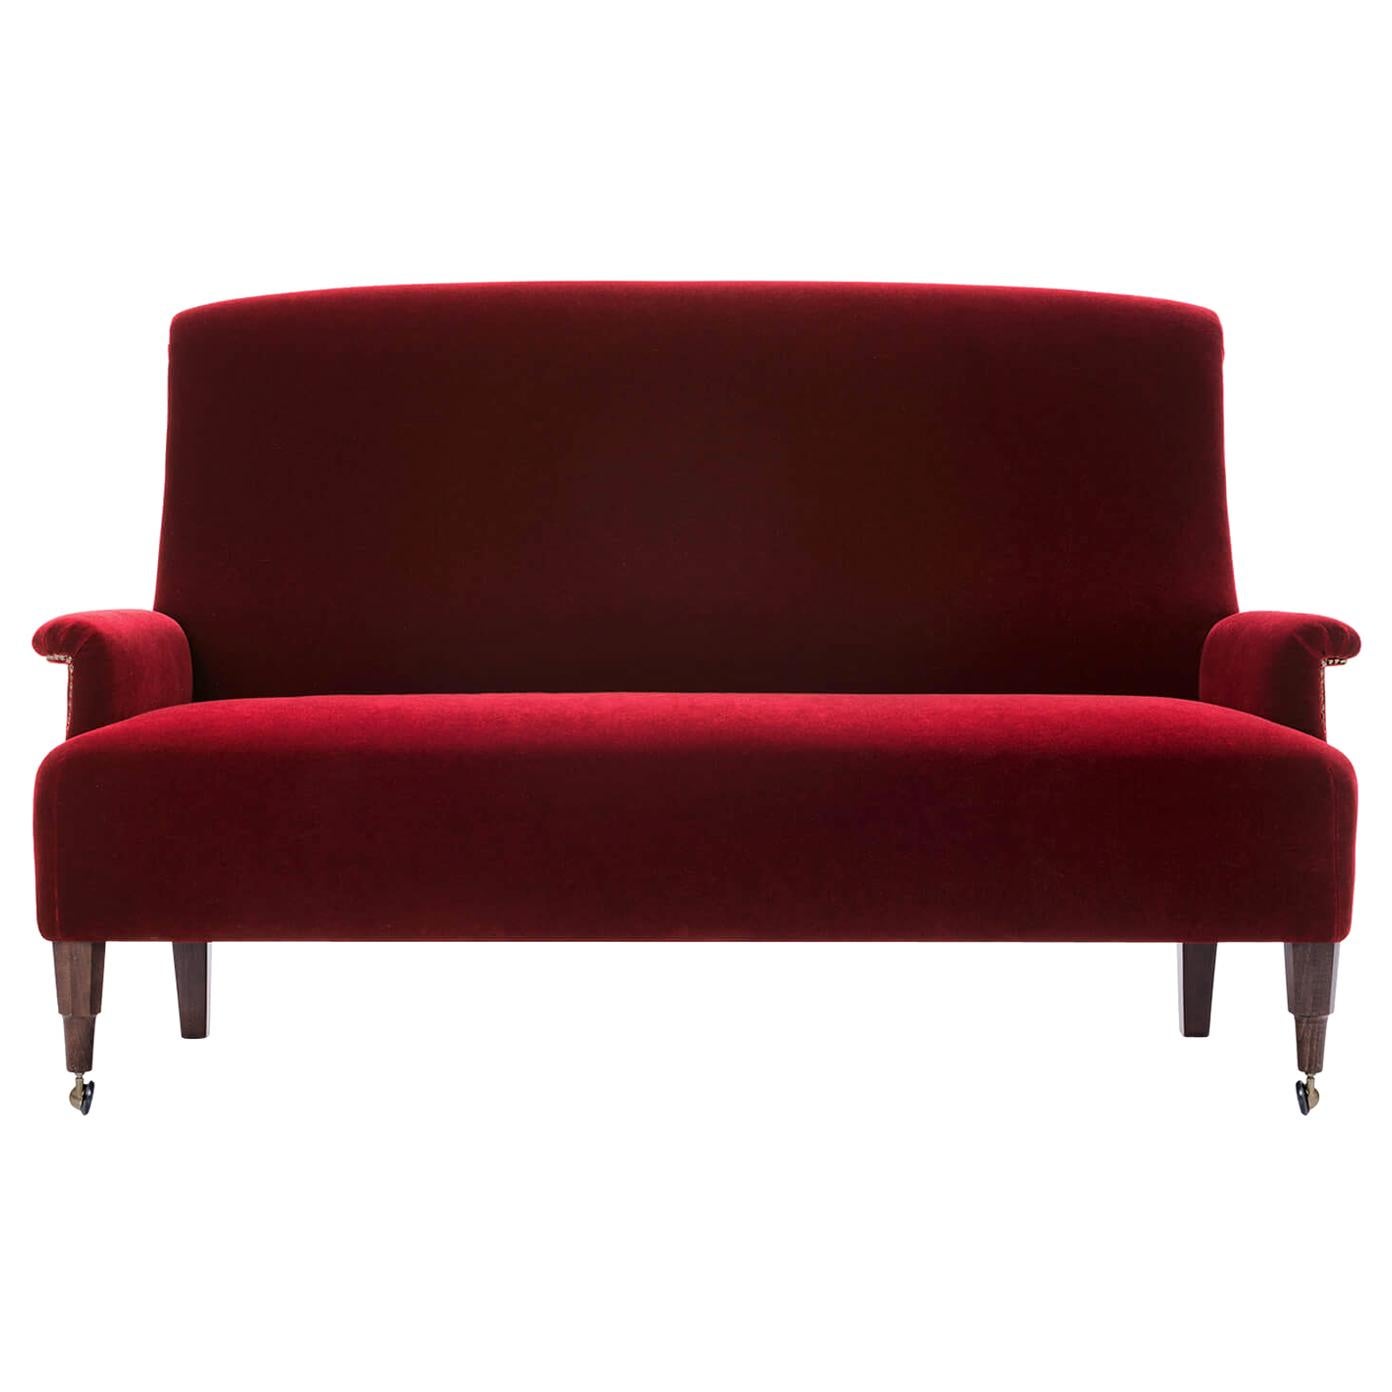 Azucena ABCD Zweisitziges Sofa von Luigi Caccia Dominioni